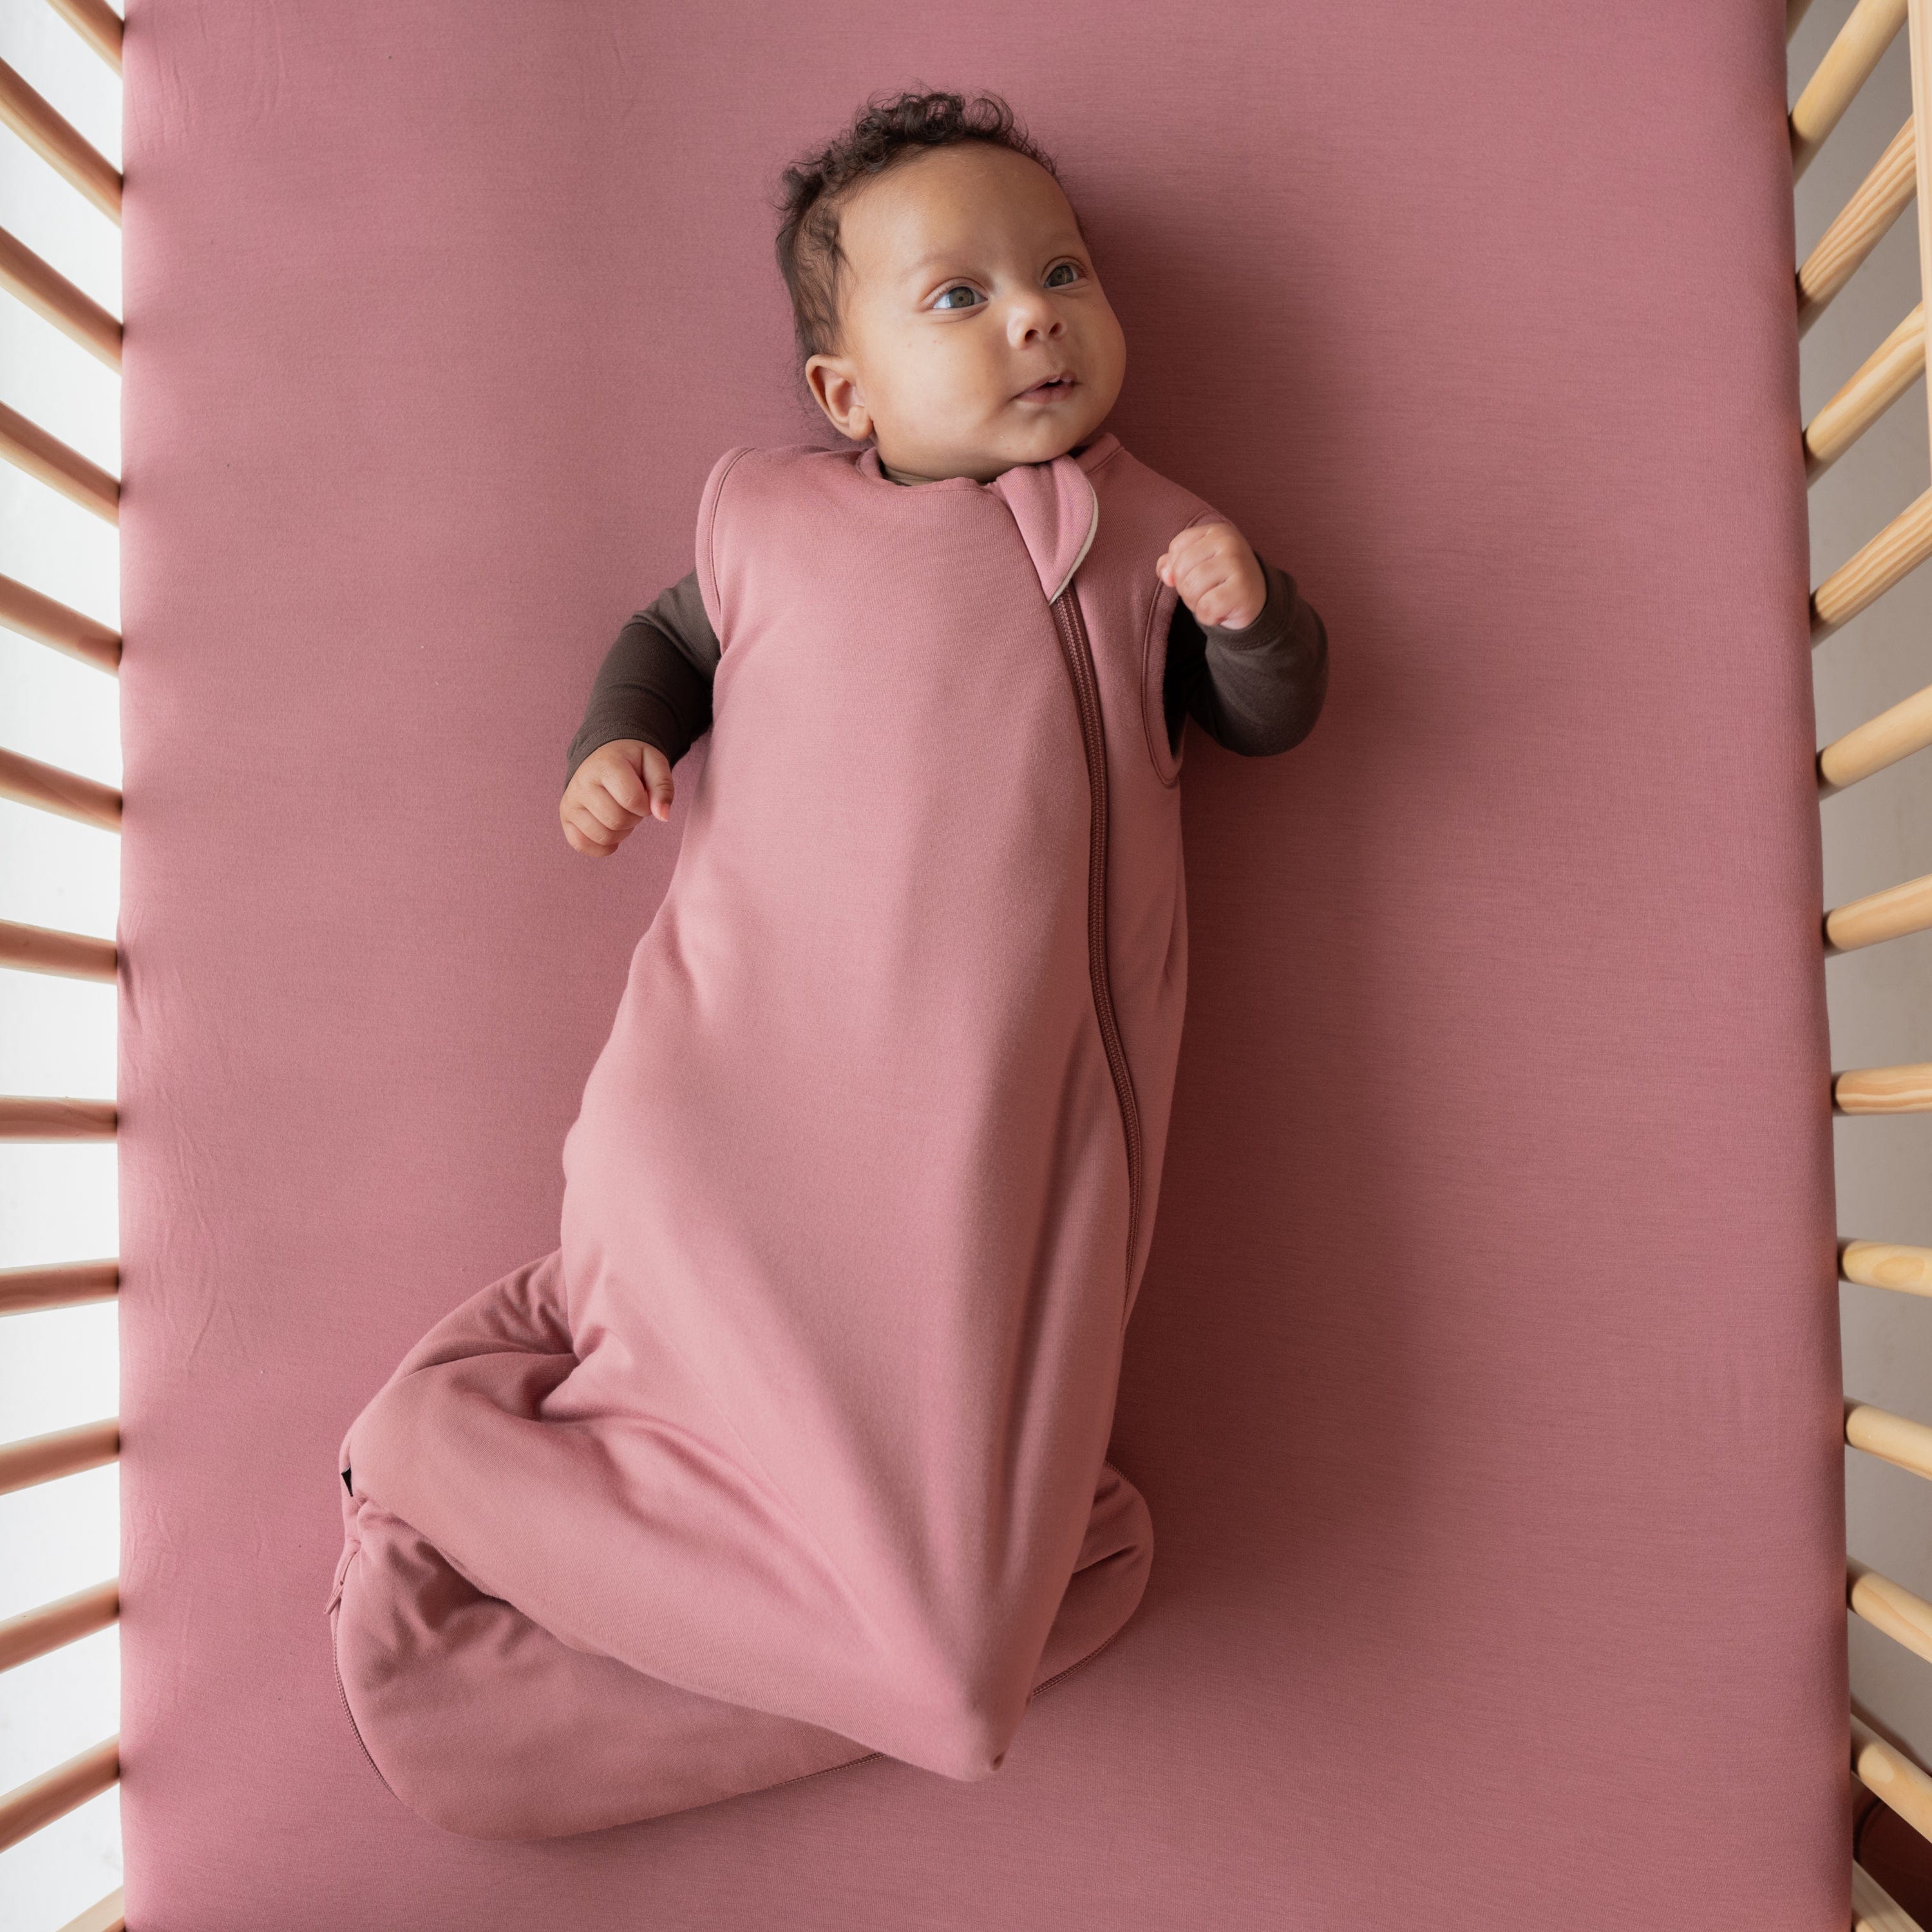 Infant wearing Kyte Baby Sleep Bag in Dusty Rose 1.0